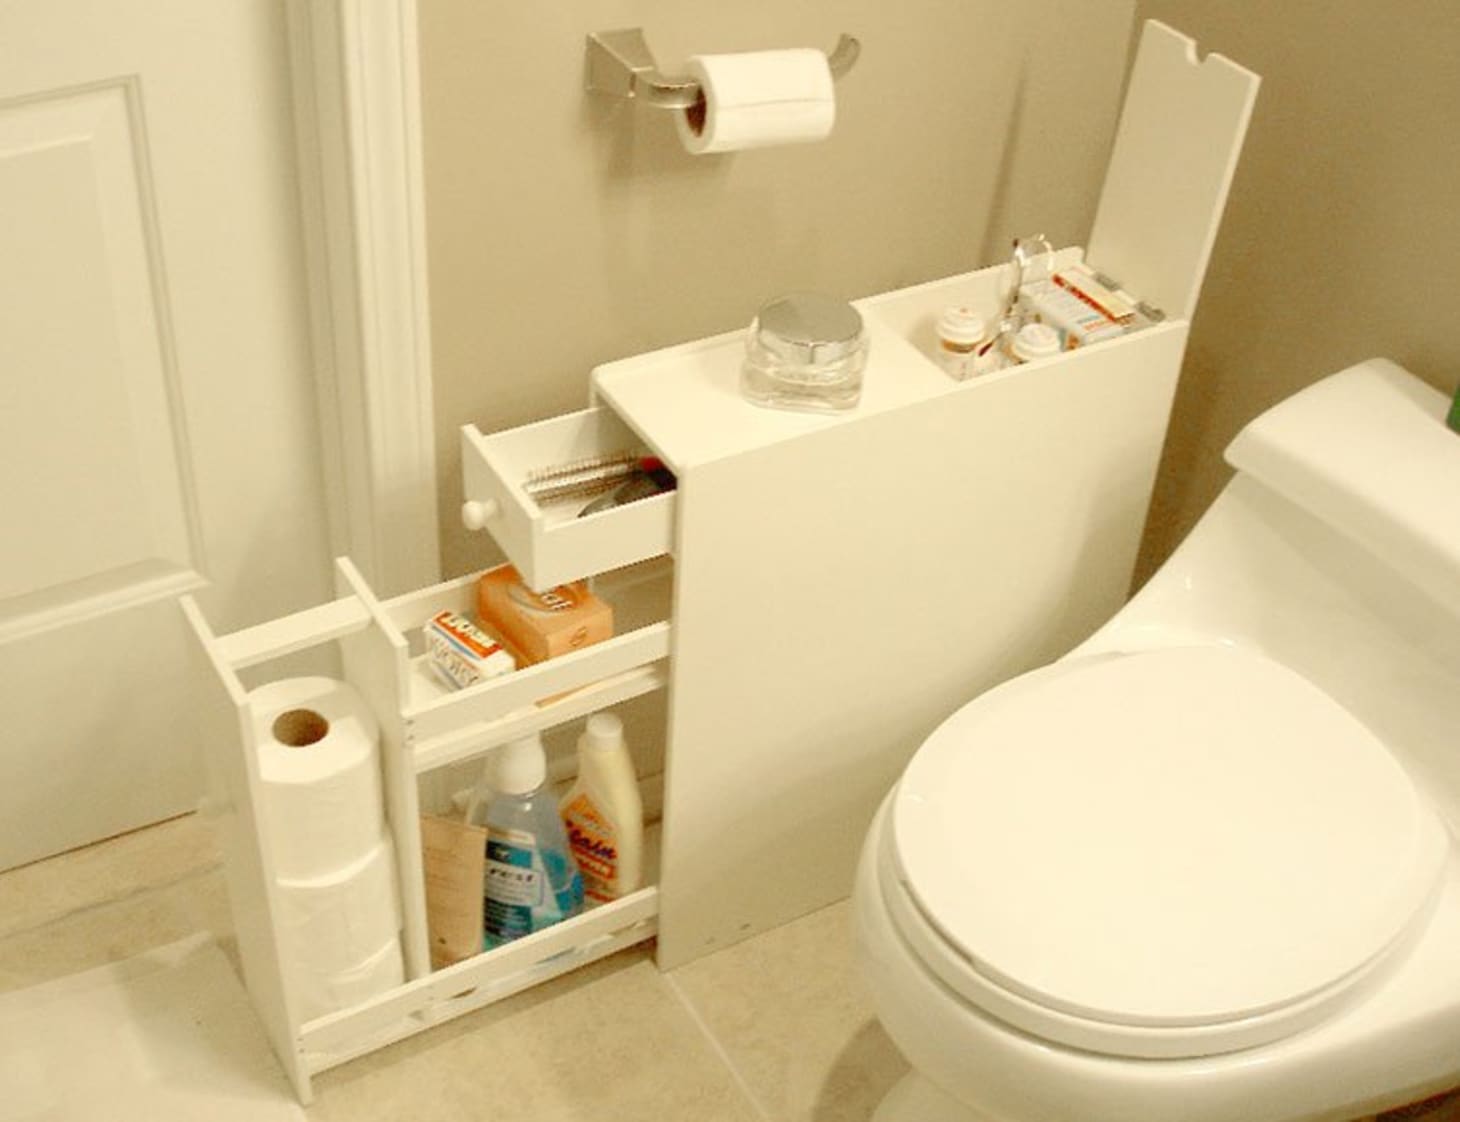  Bathroom  Storage  Ideas  Storage  For Small Bathrooms  